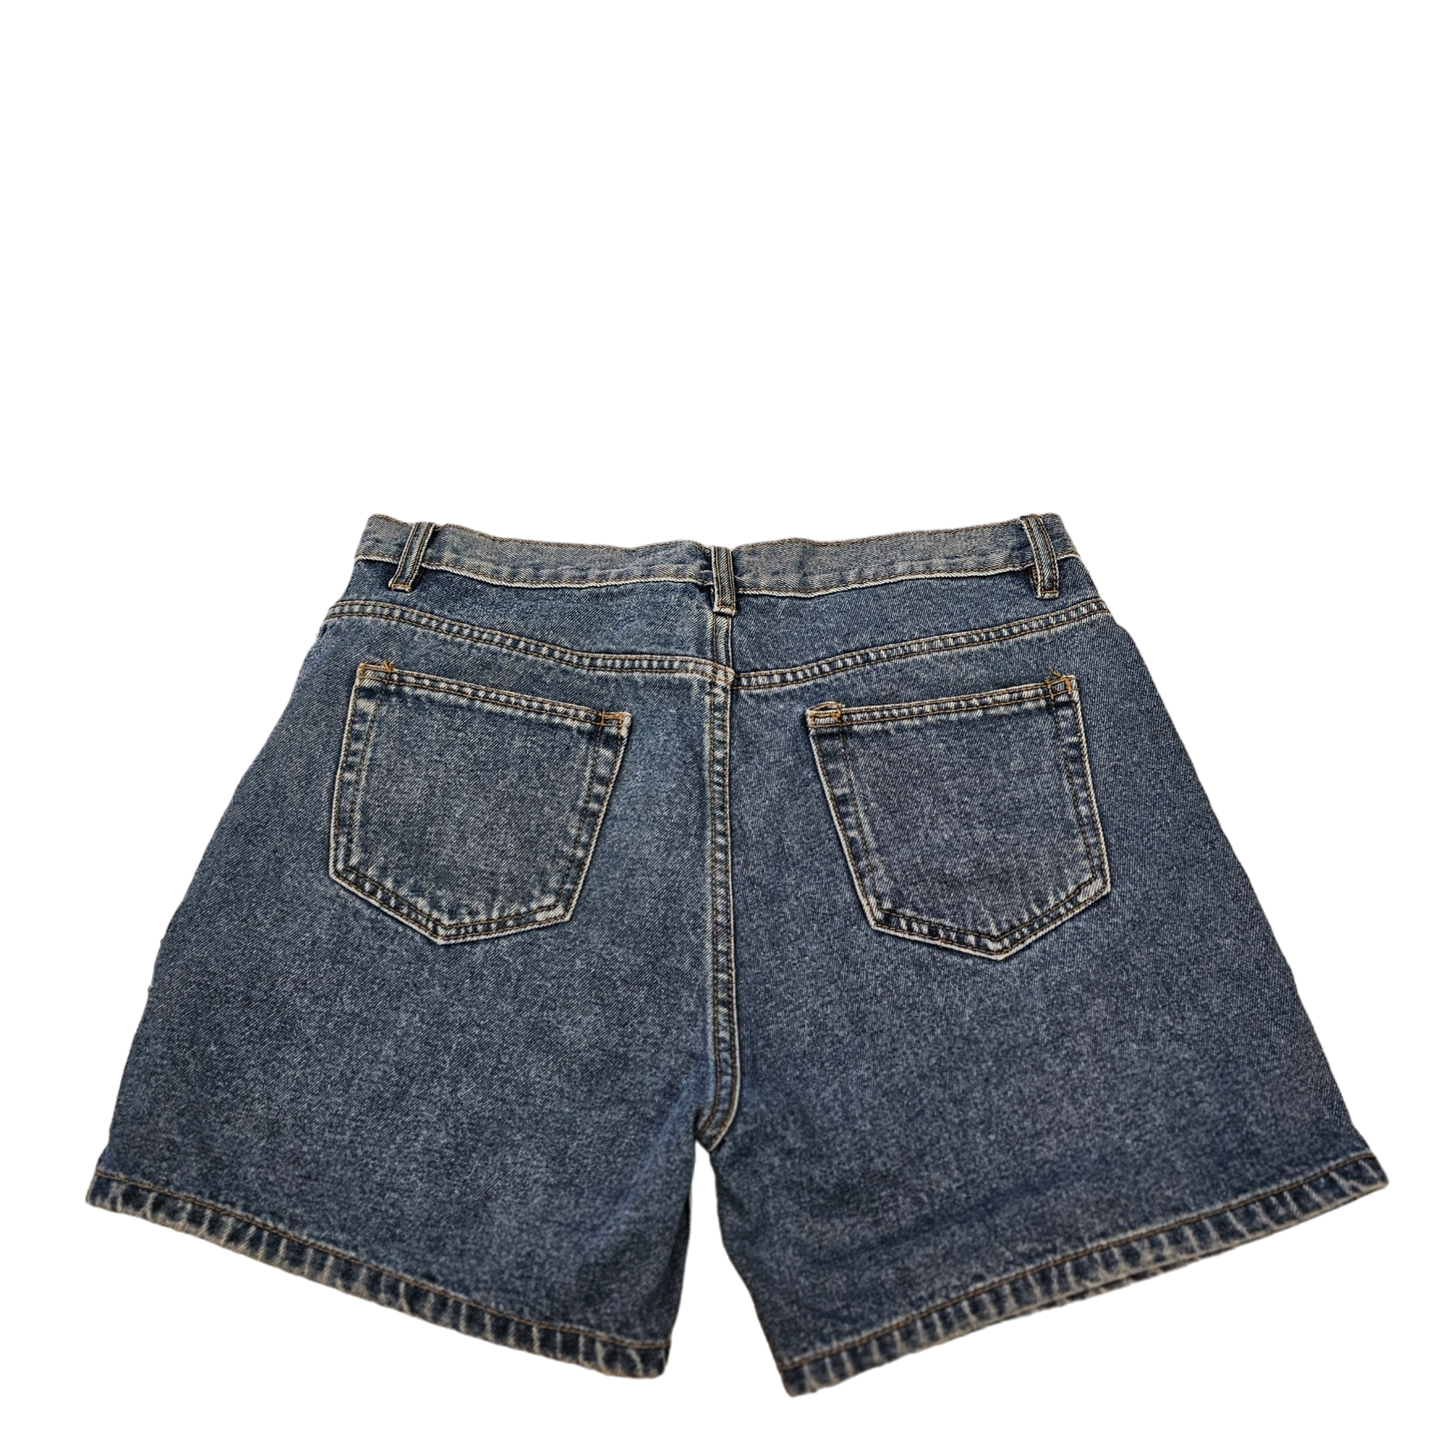 Shorts By PB BASICS Size: 12